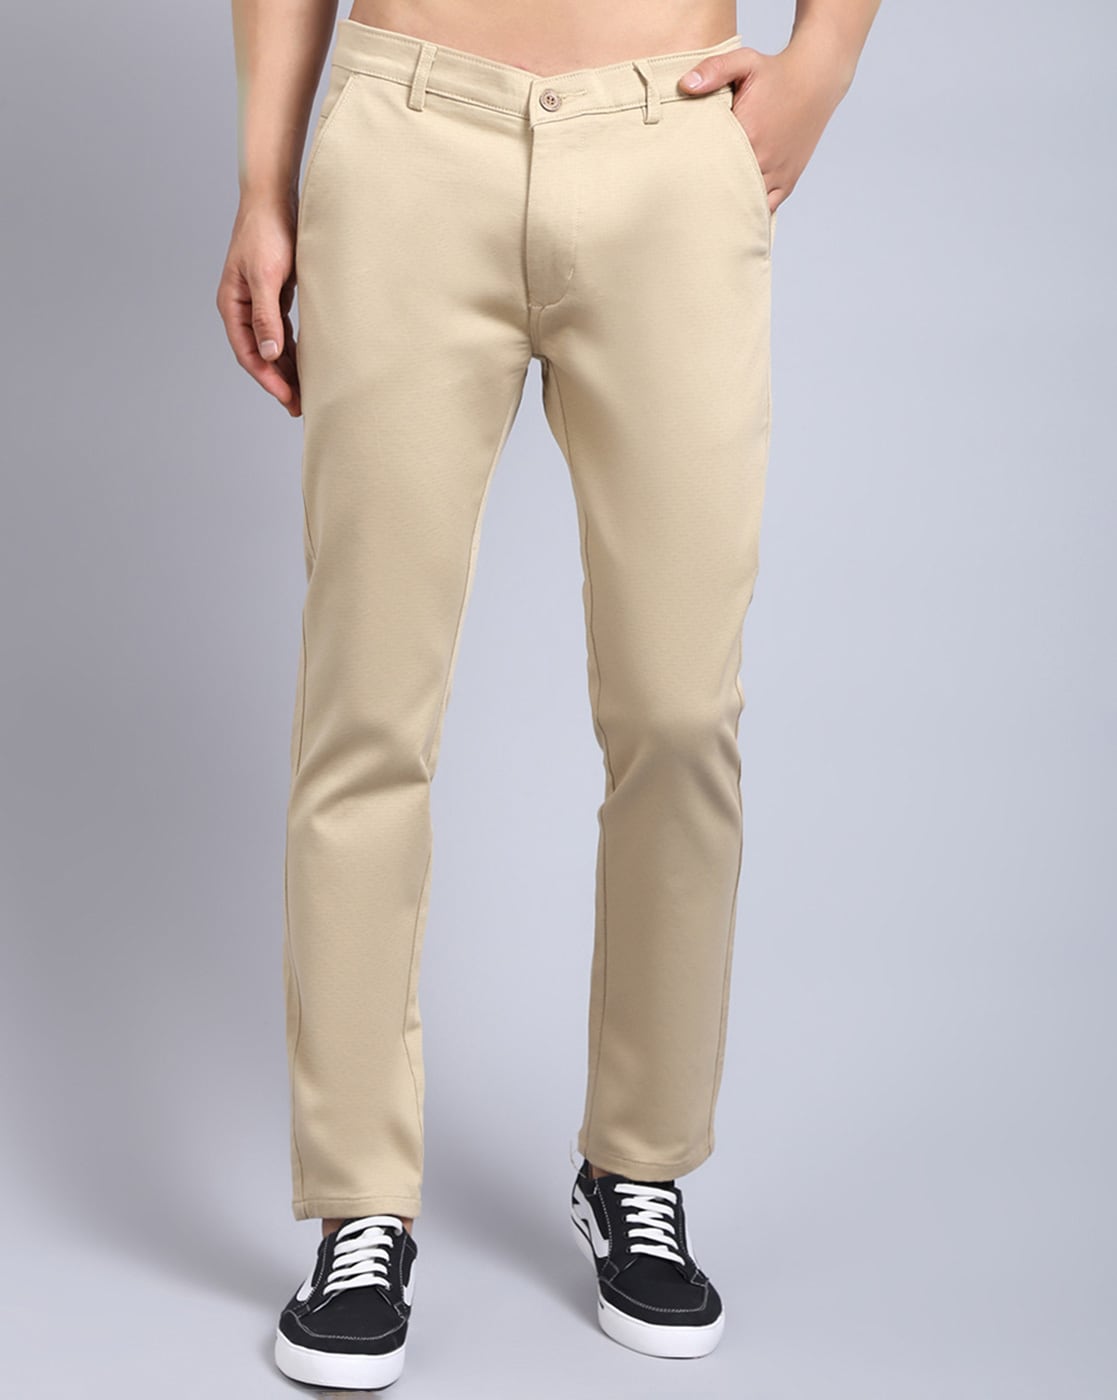 Top 20 Latest Simple  Beautiful Trouser Designs for Men  Apan Outlook